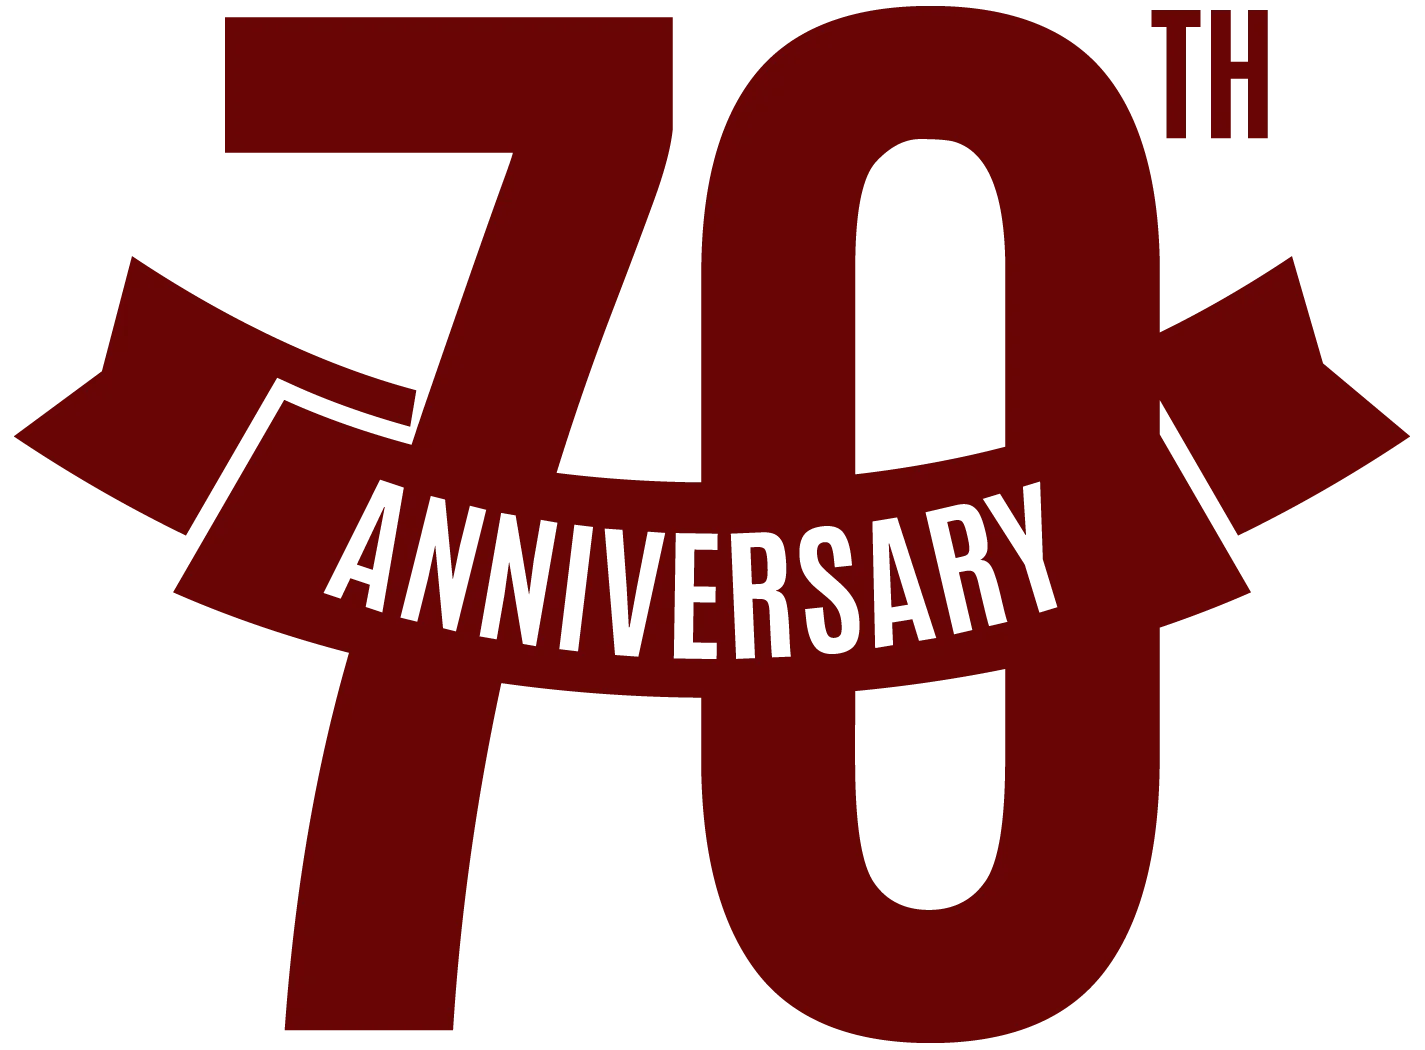 70th anniversary